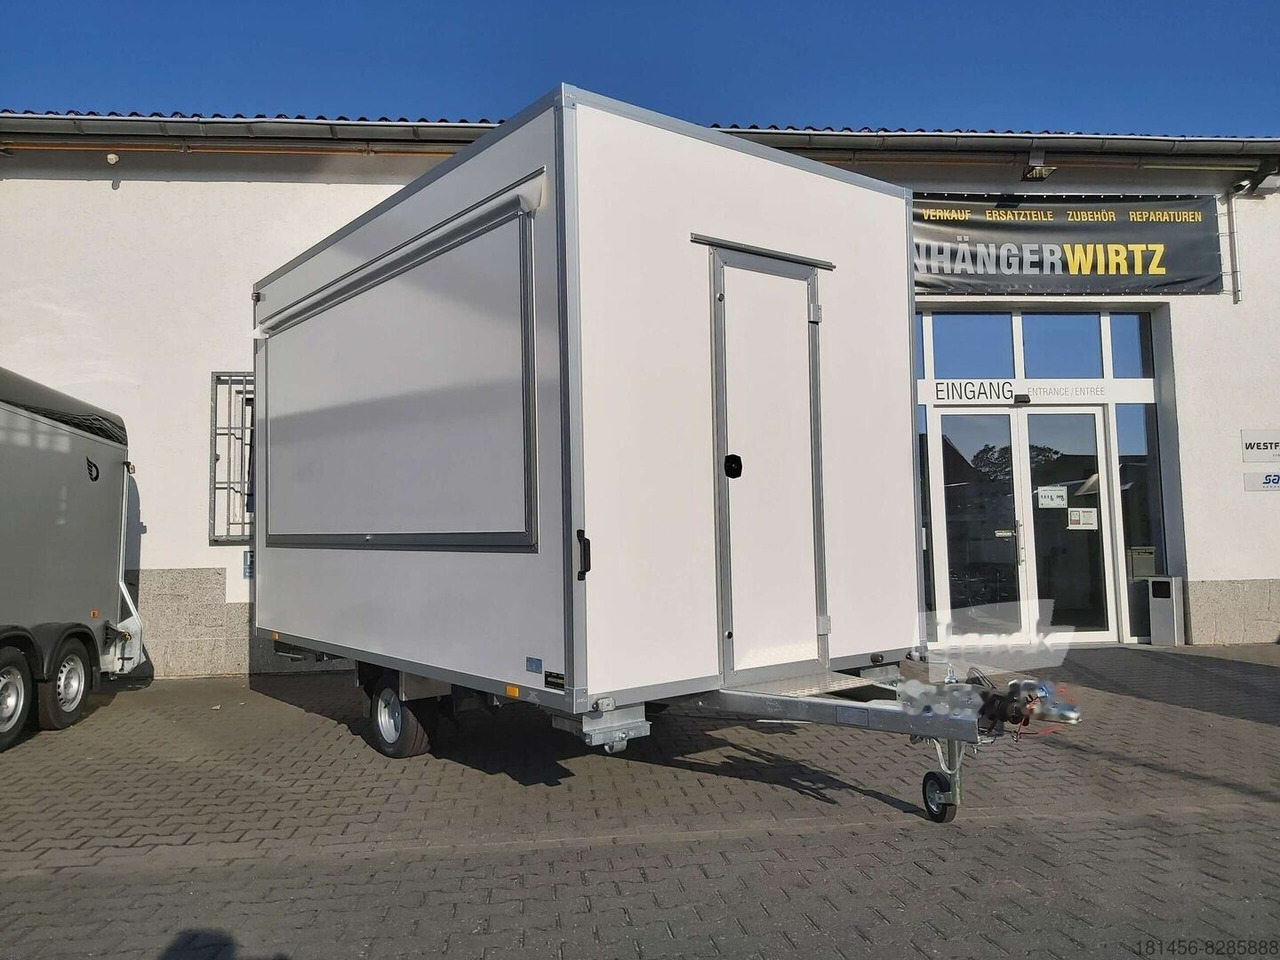 New Vending trailer Wm Meyer VKH 1337 Verkaufsklappe Boden eben isoliert direkt bei ANHÄNGERWIRTZ verfügbar: picture 2